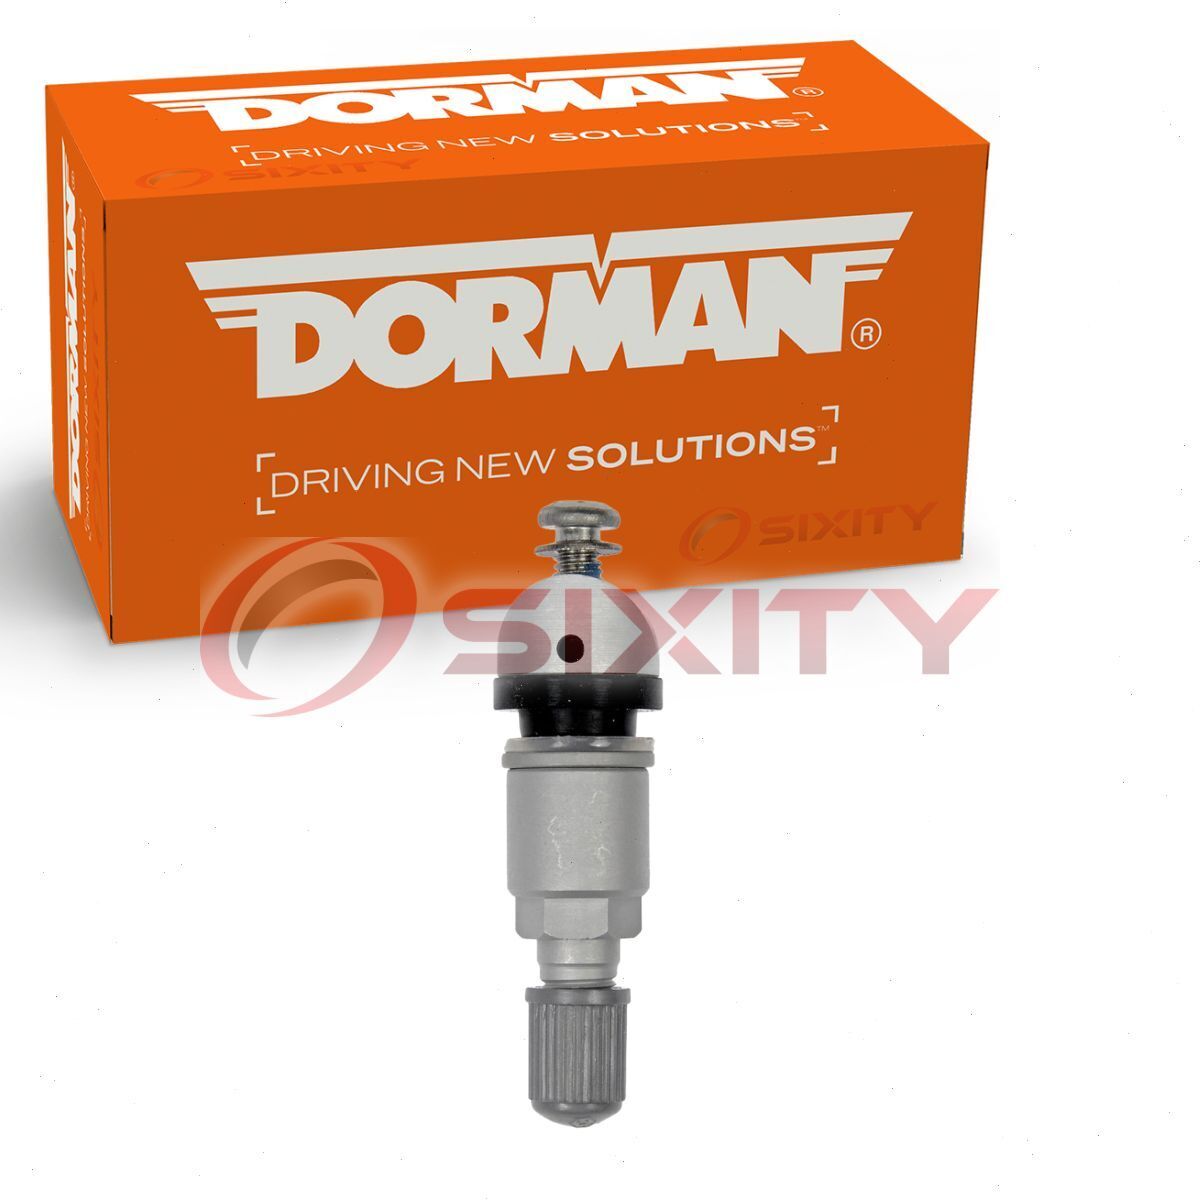 Dorman TPMS Valve Kit for 2000 BMW 323Ci Tire Pressure Monitoring System  cj